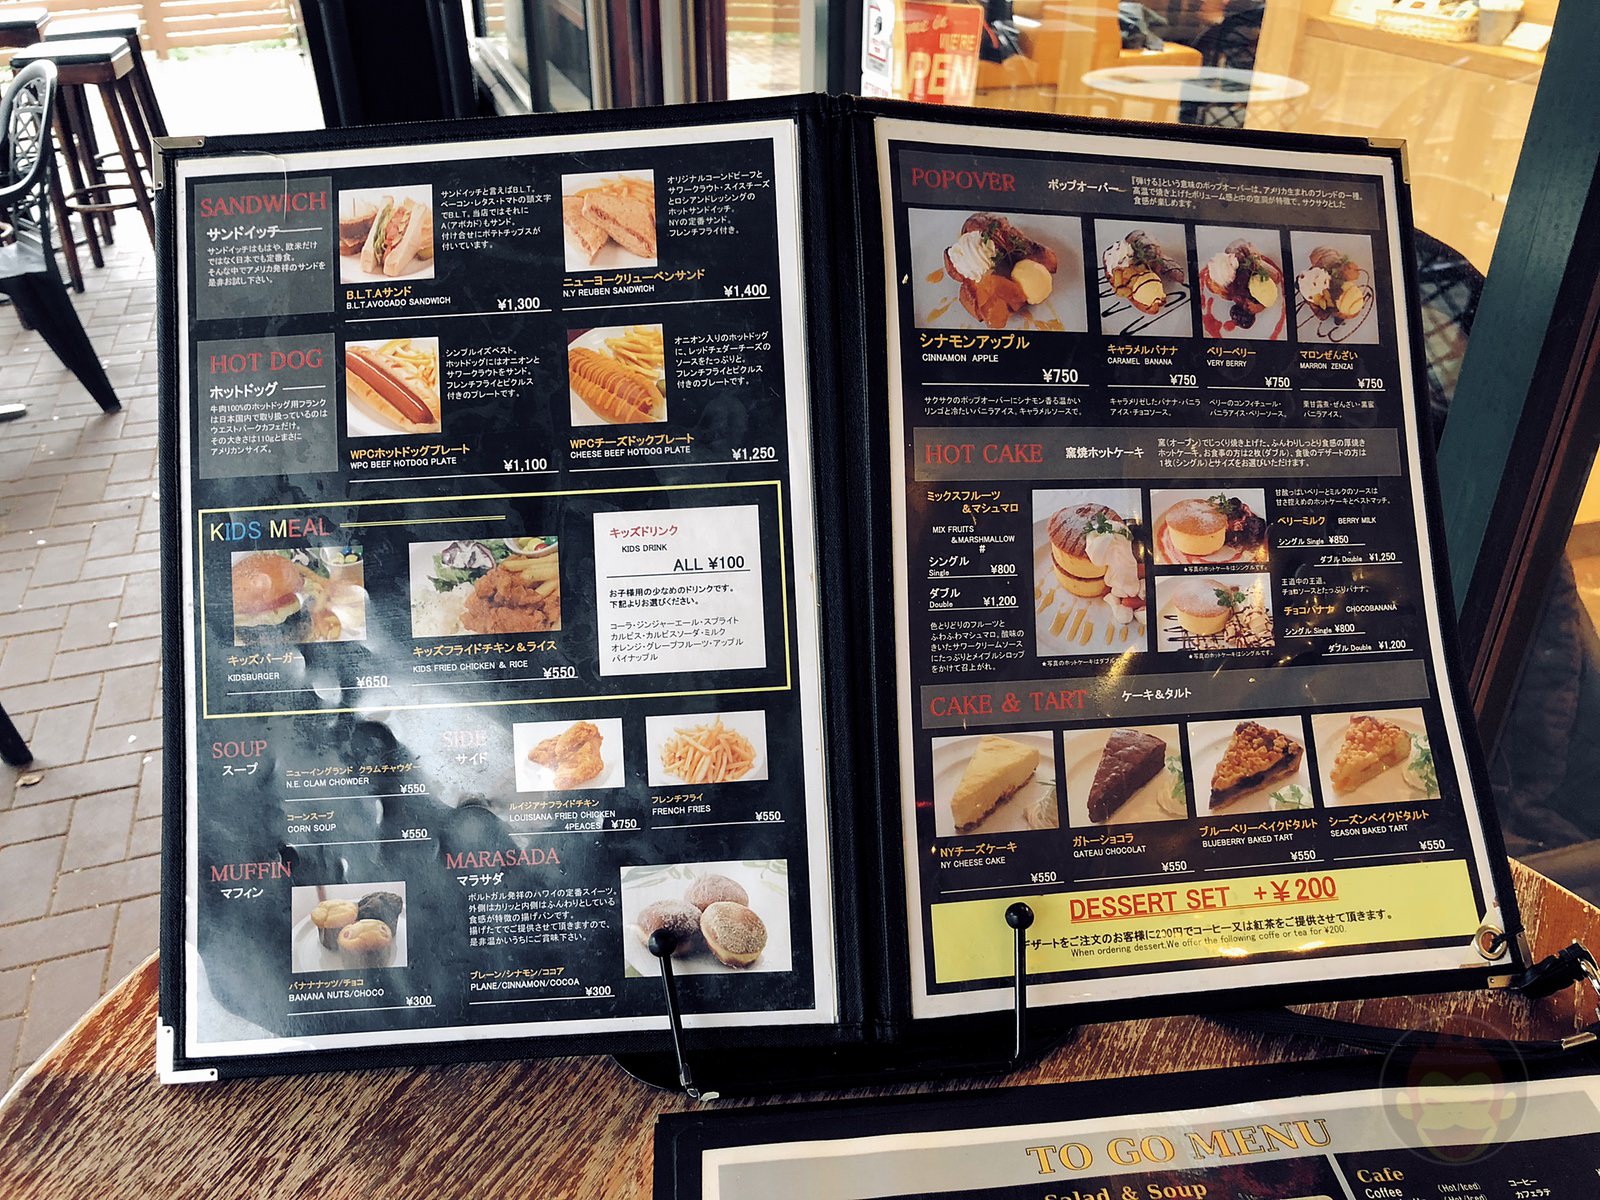 West-Park-Cafe-Gotenba-Outlet-Store-08.jpg